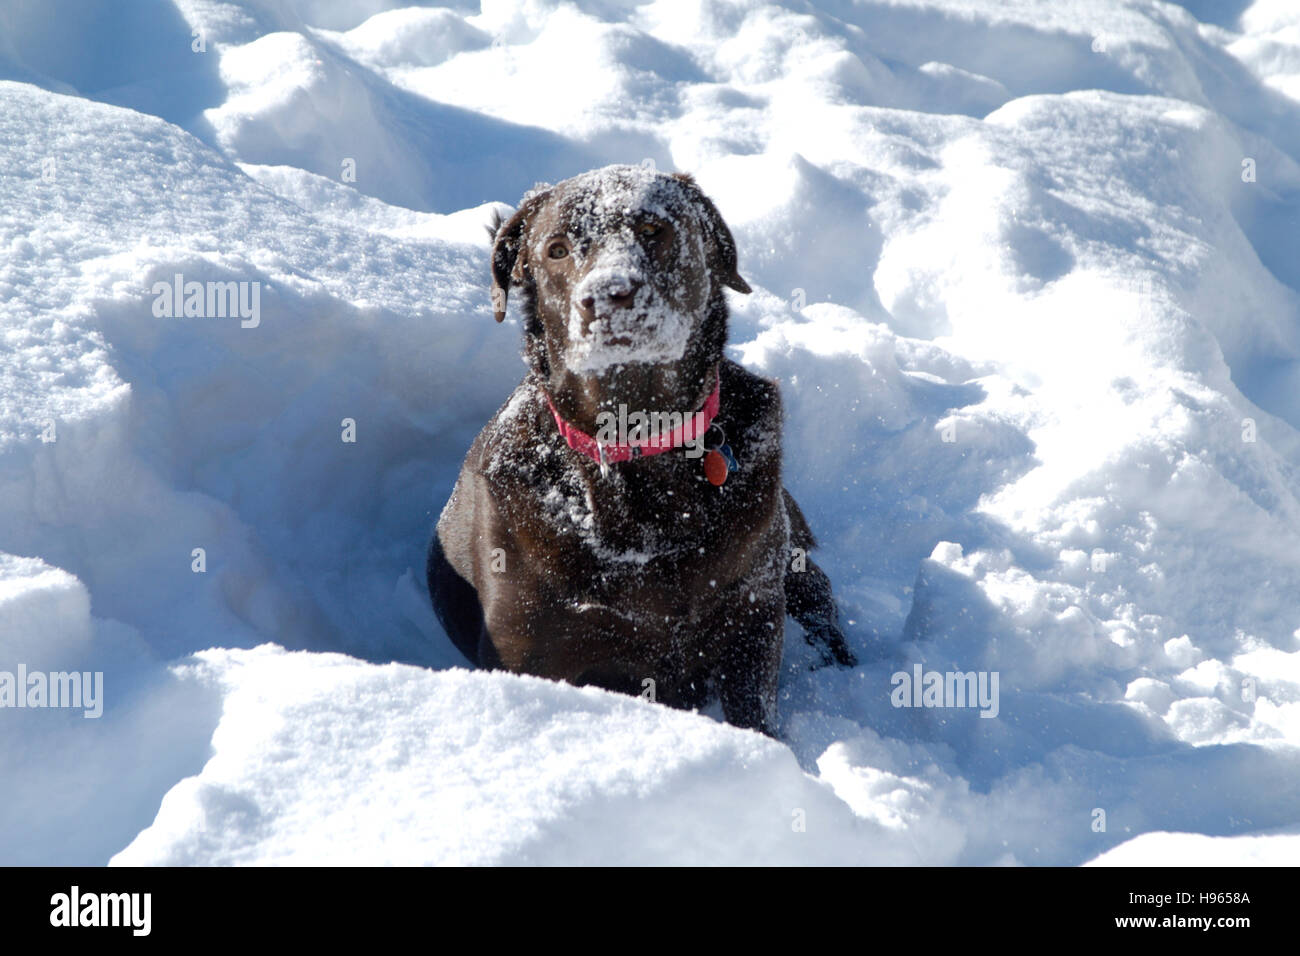 Chocolate Labrador Retriever face covered with snow Stock Photo